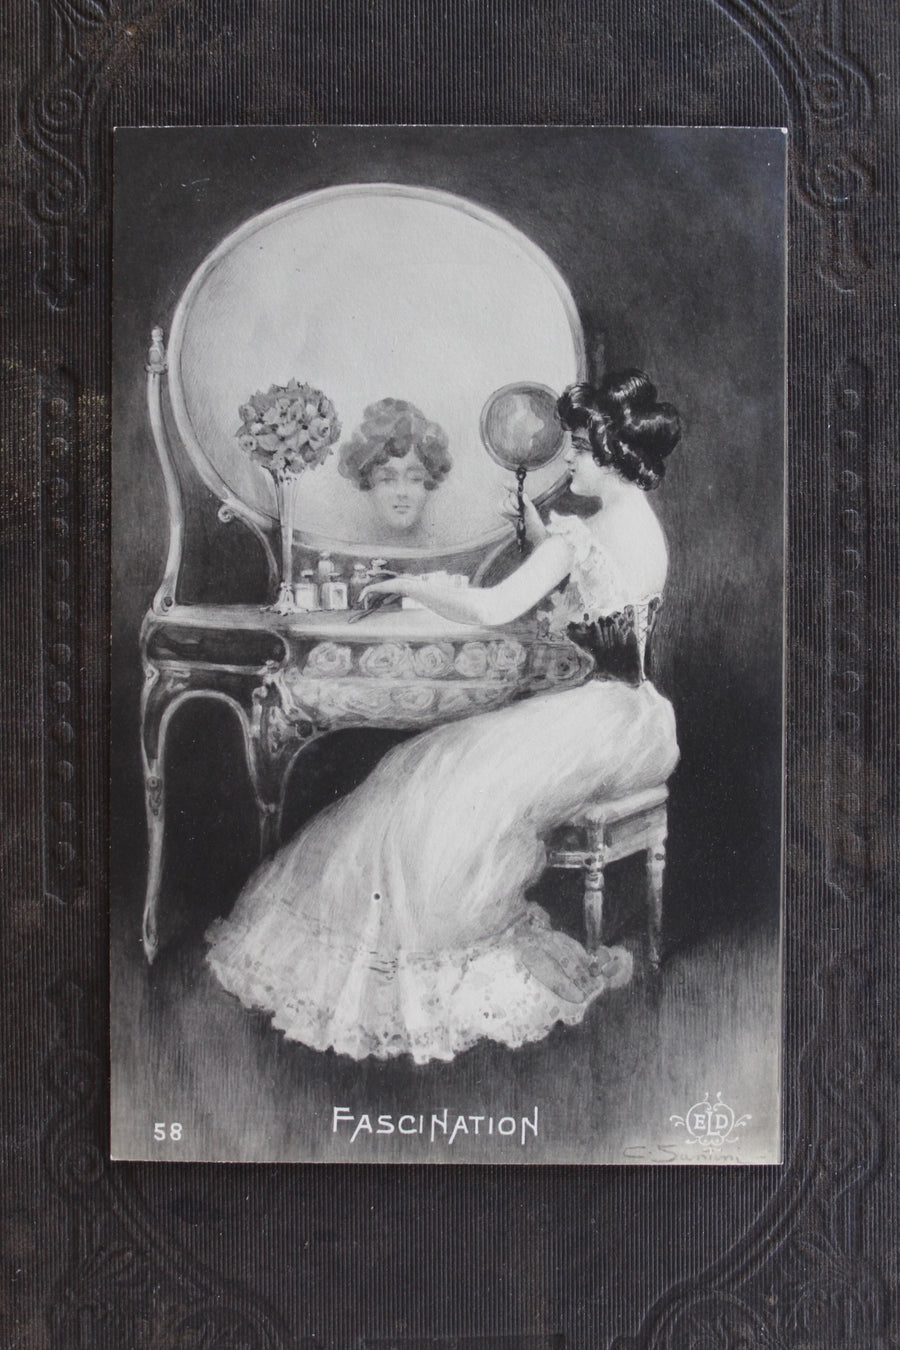 Fascination - Metamorphic Skull Postcard